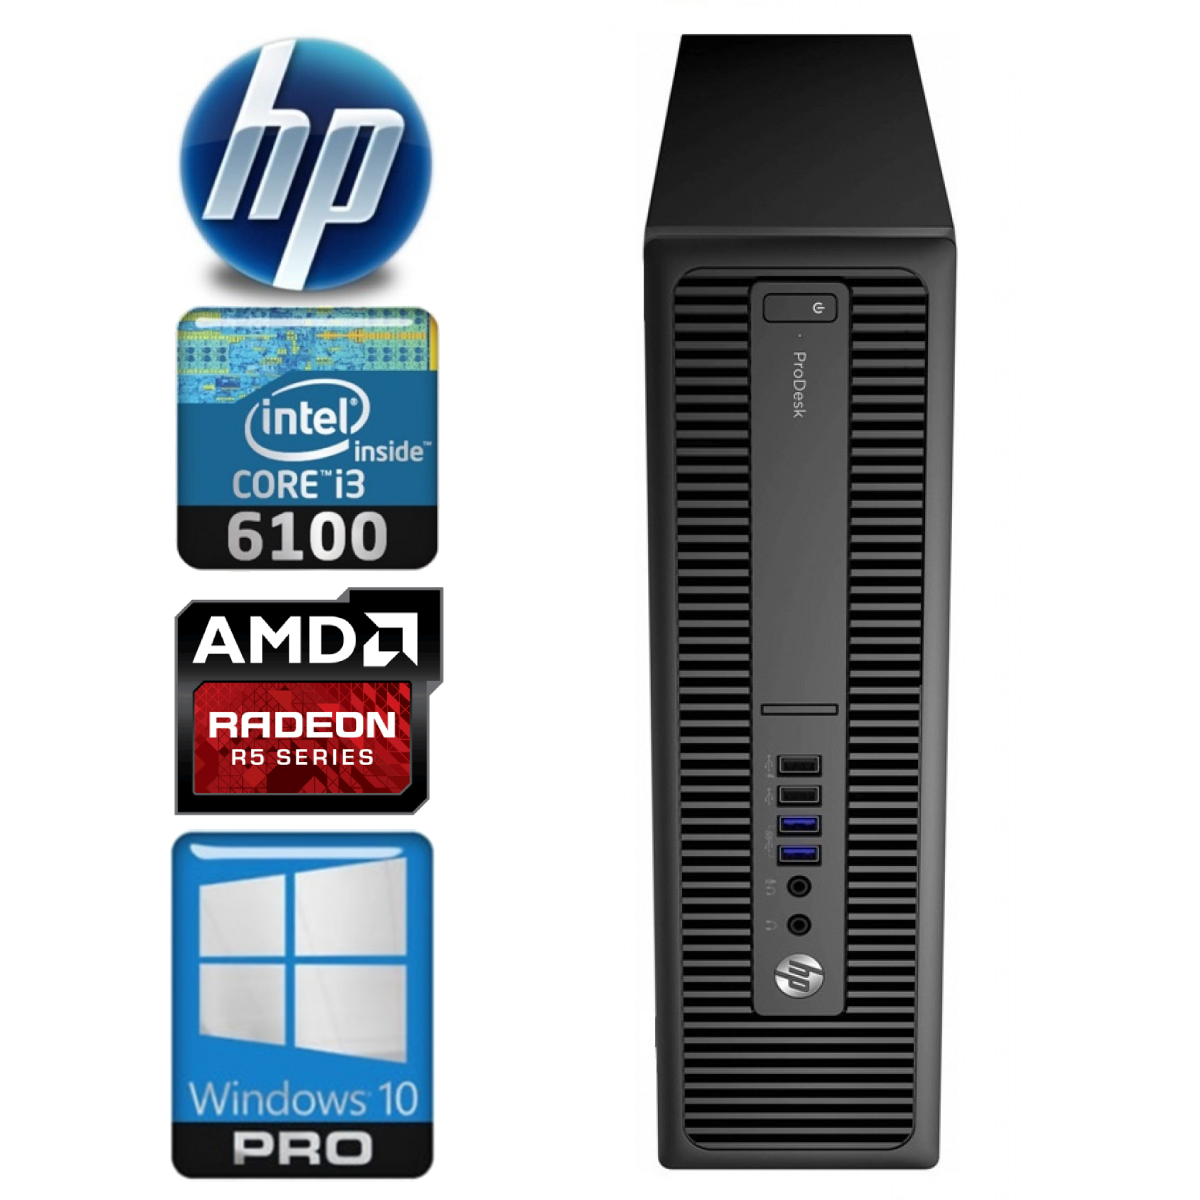 HP 600 G2 SFF i3-6100 16GB 128SSD R5-340 2GB WIN10Pro RW35774 (EAN411535774)